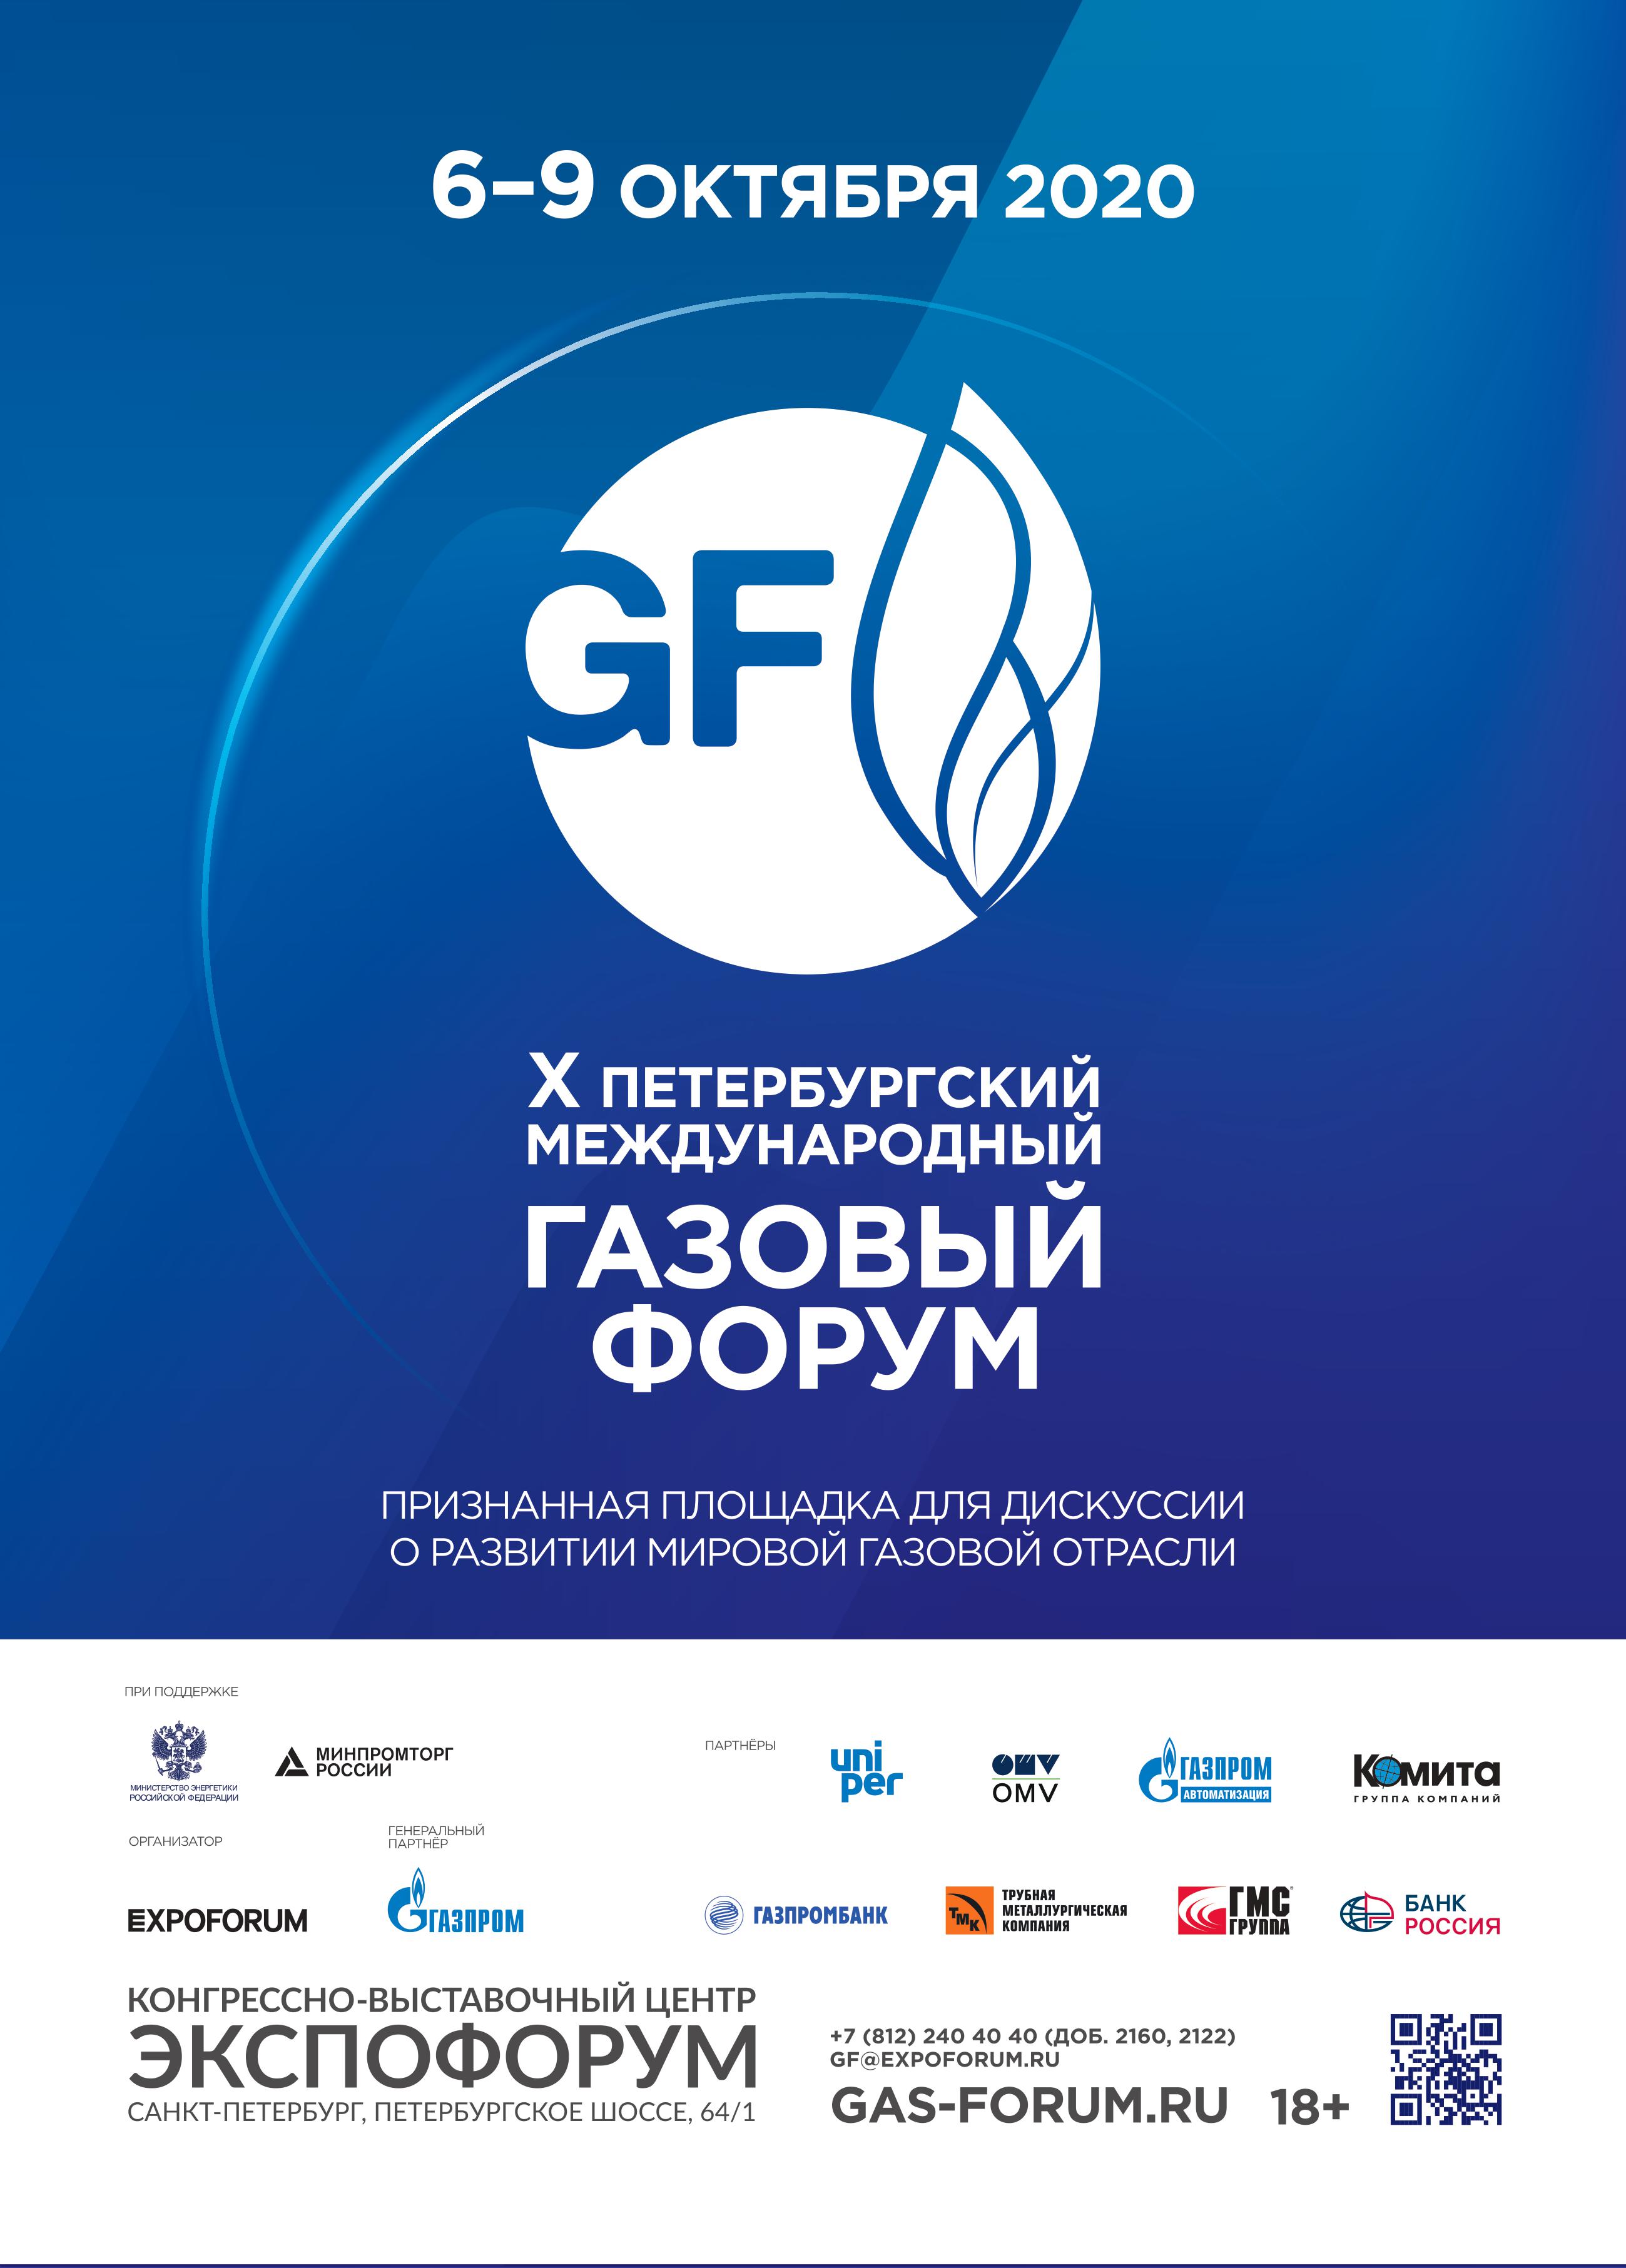 Петербургскому международному газовому форуму - 10 лет!